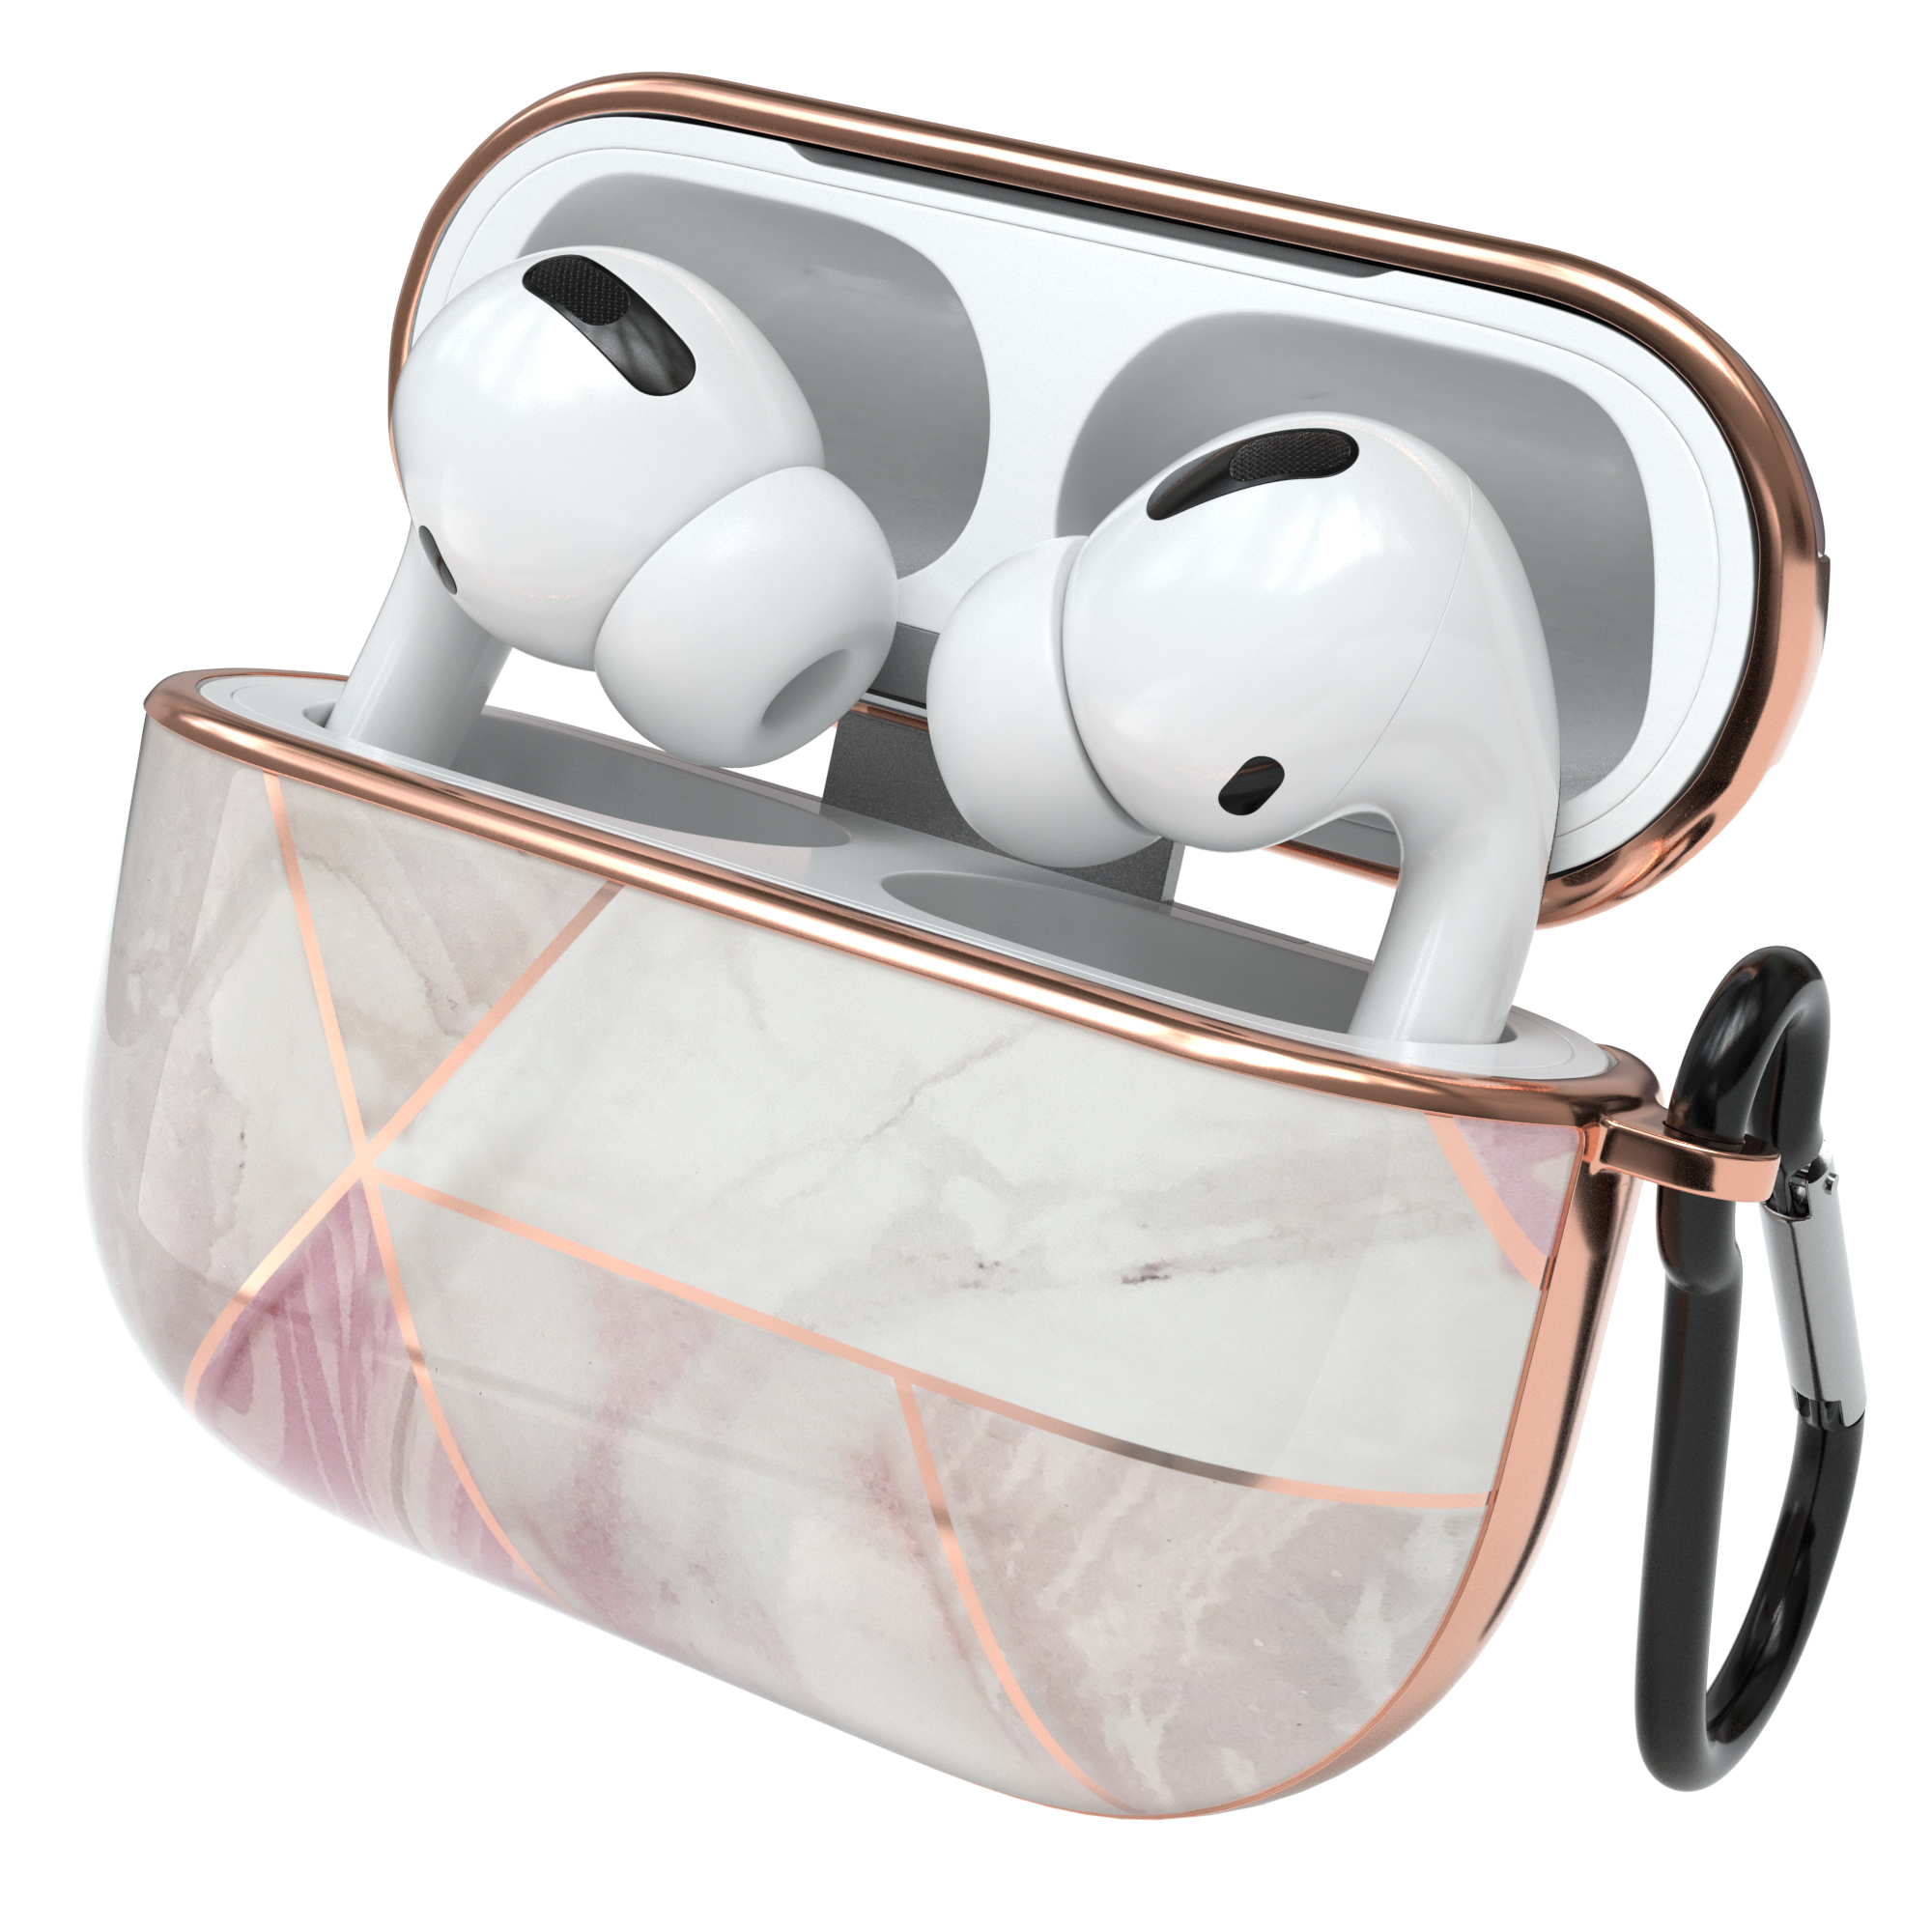 CASE EAZY Pro für: Roségold Motiv Apple IMD Sleeve Rosa passend / Case AirPods Schutzhülle